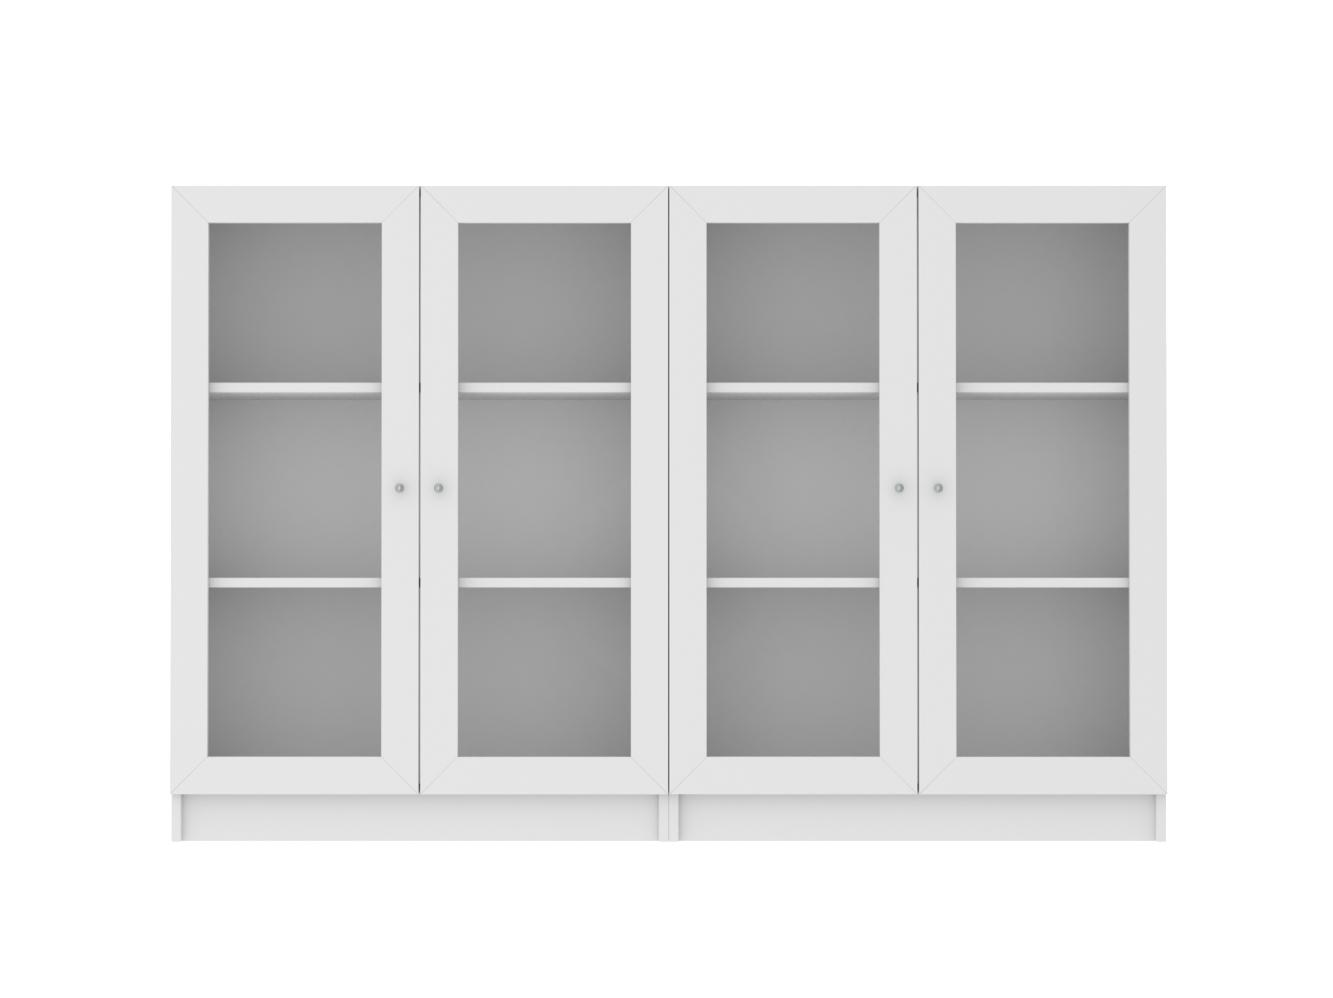  Книжный шкаф Билли 328 white ИКЕА (IKEA) изображение товара